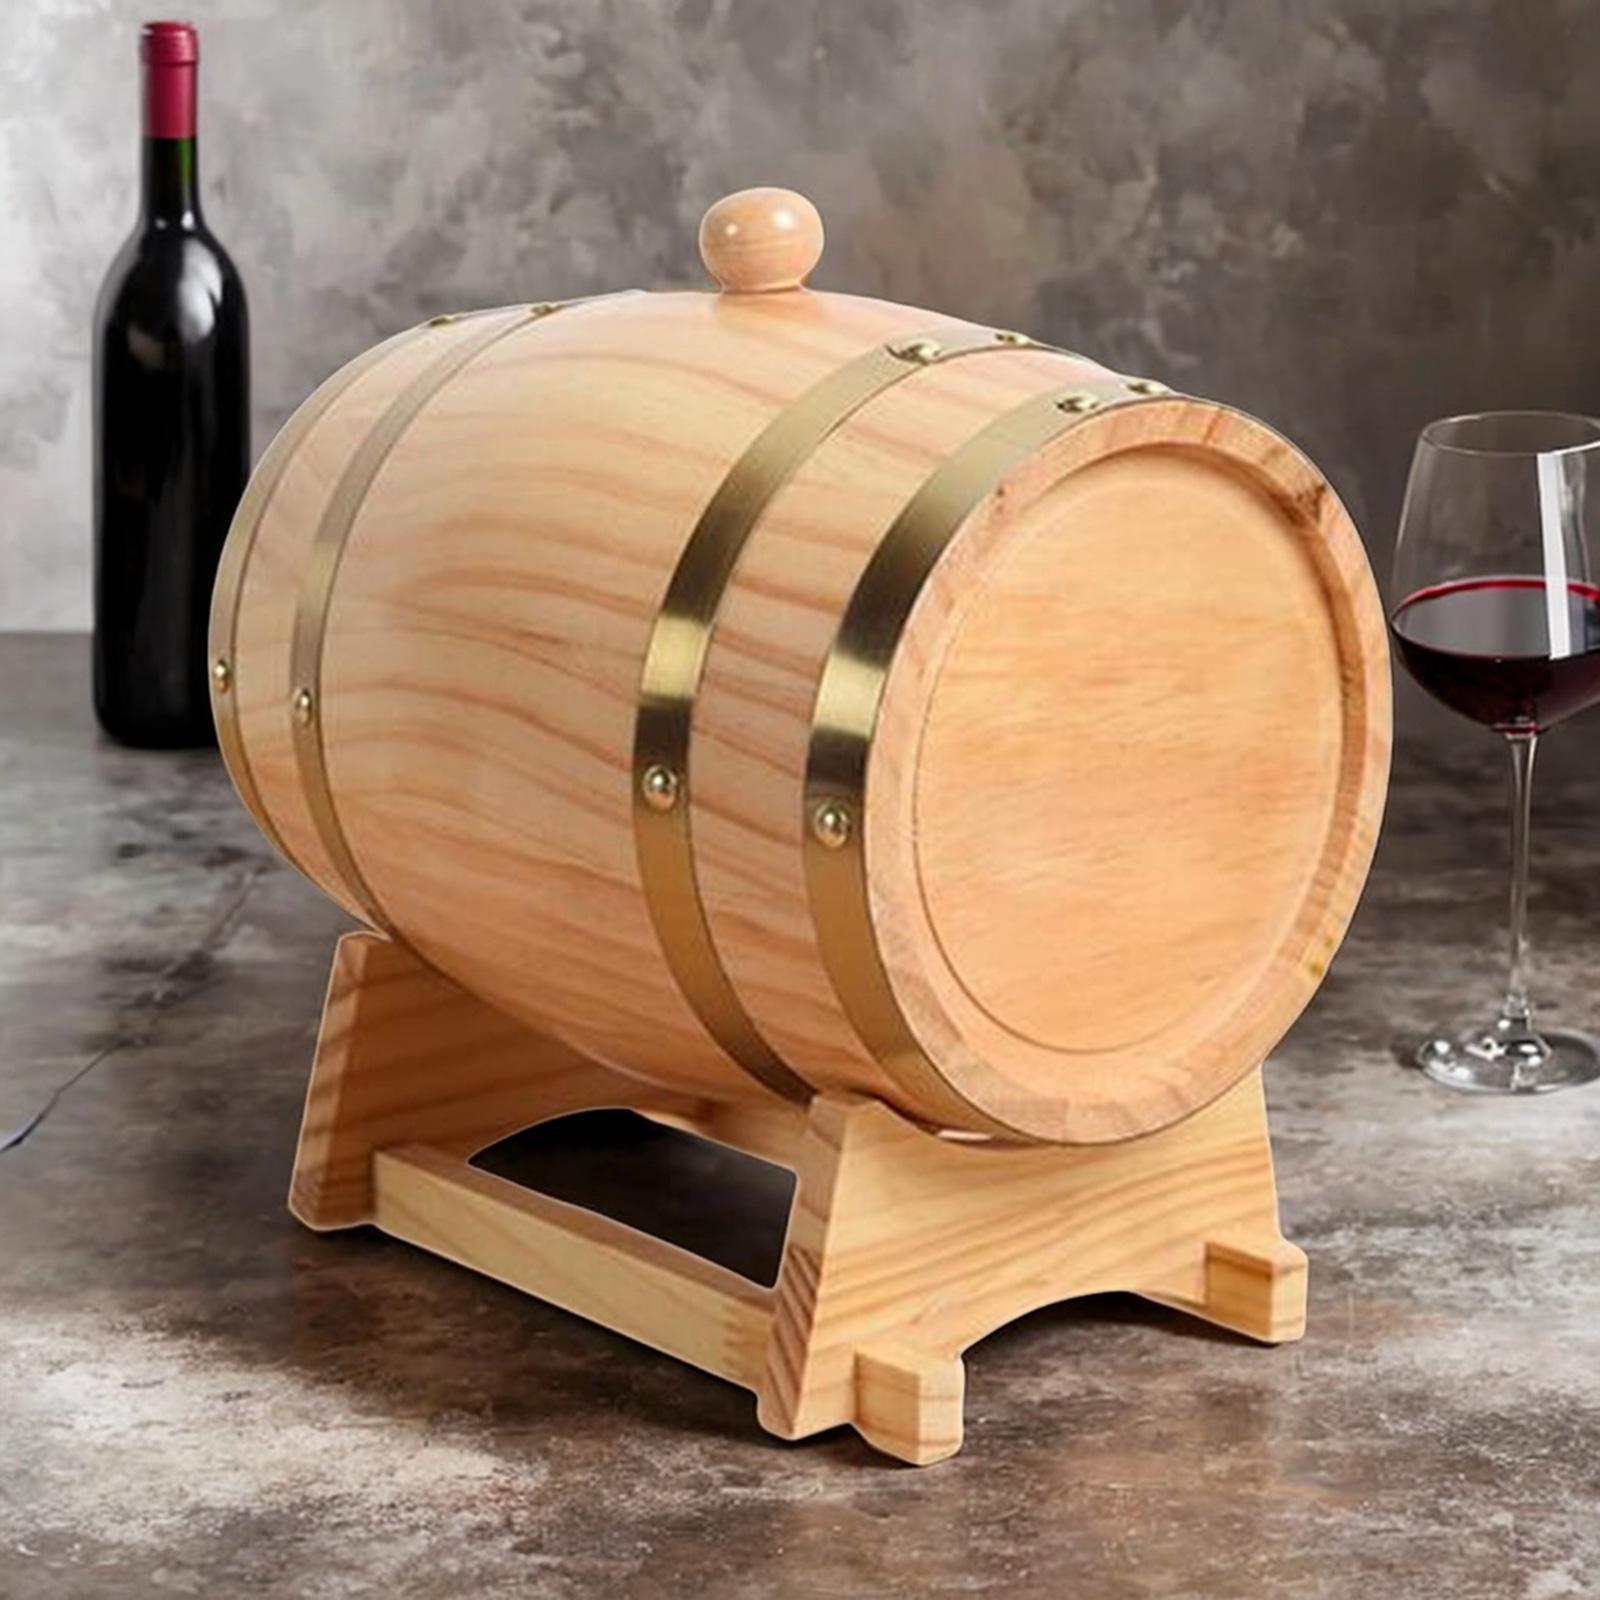 oshhni Whiskey Barrel Dispenser, Wood Wine Barrel Accessories